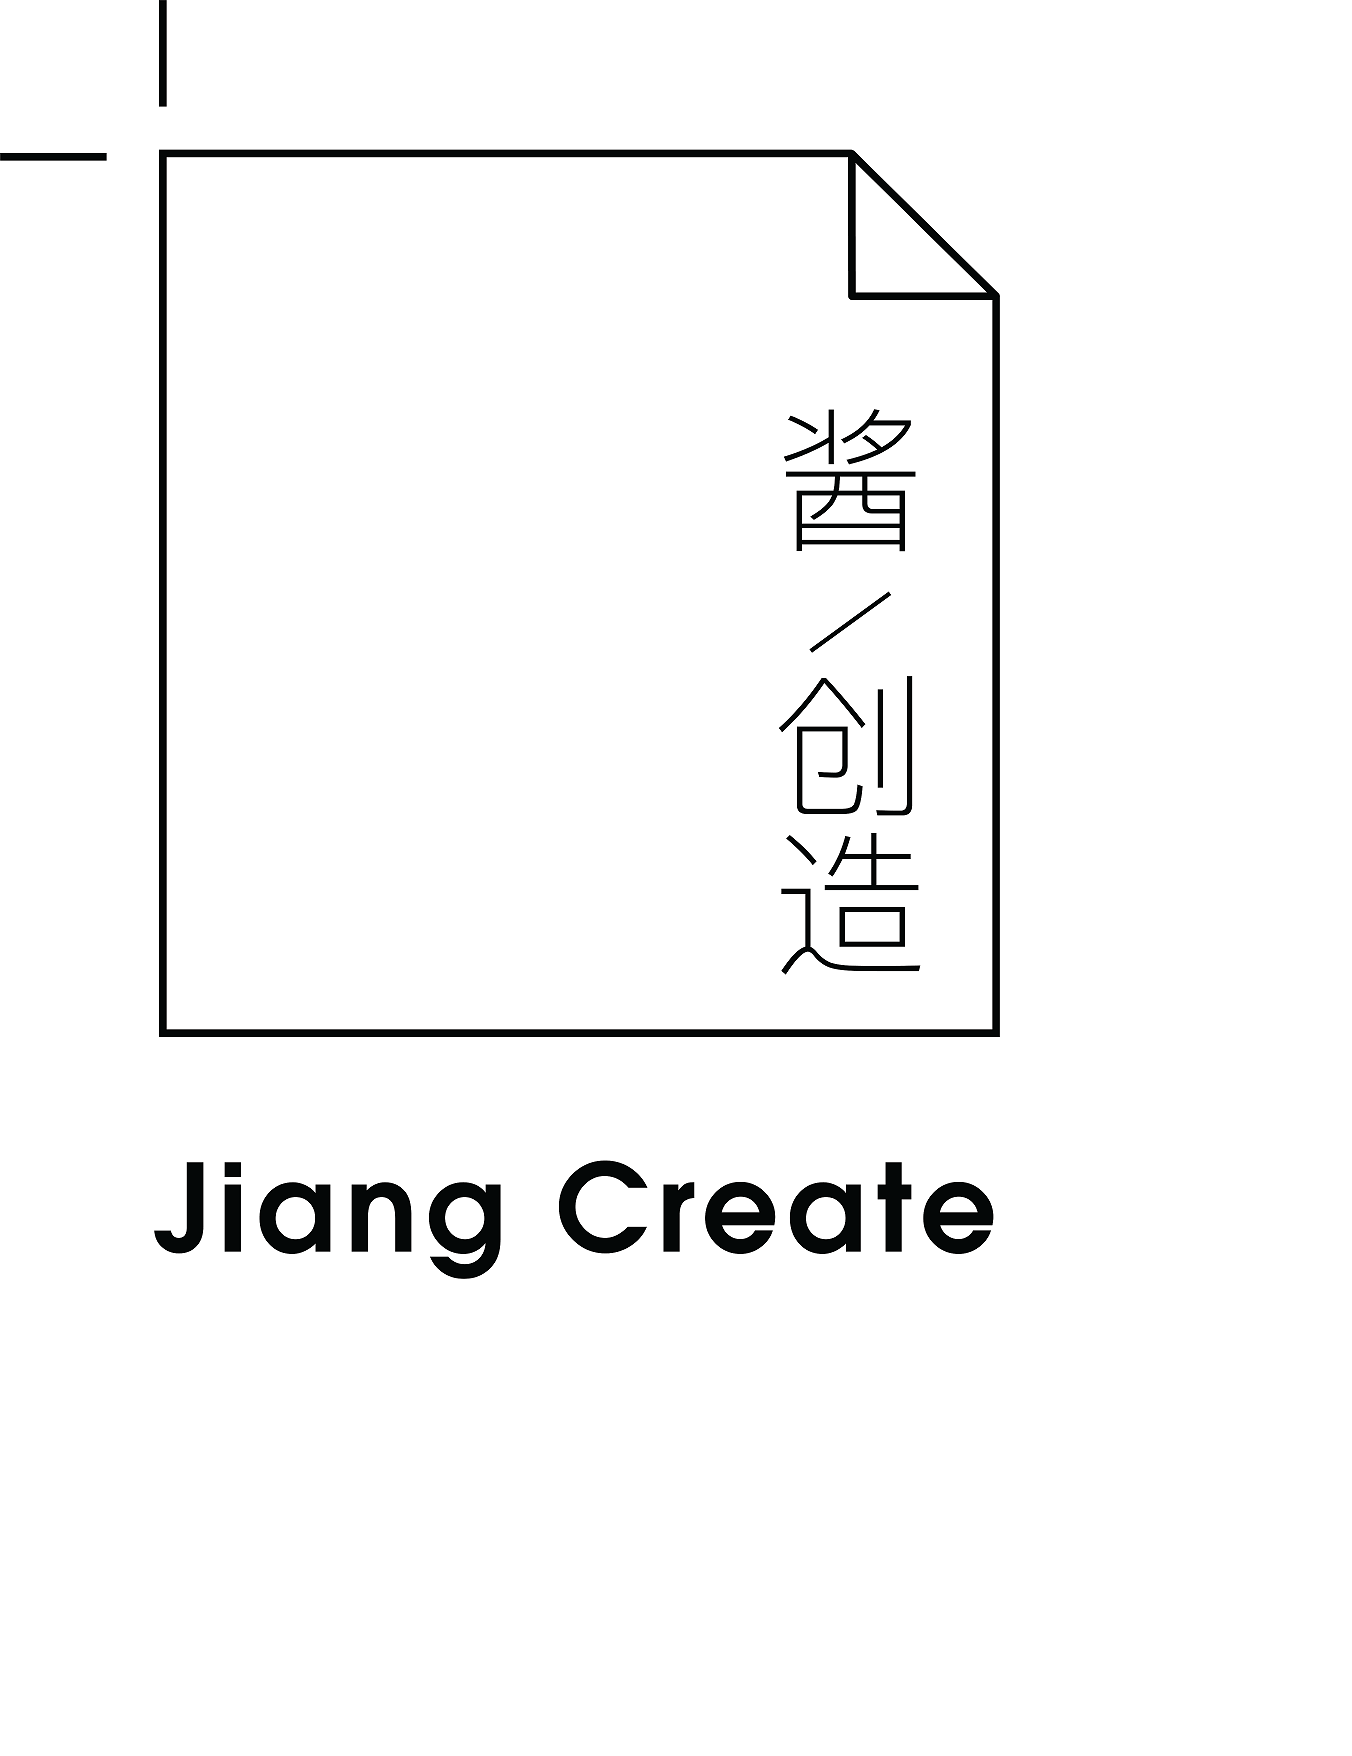 Jiang Create